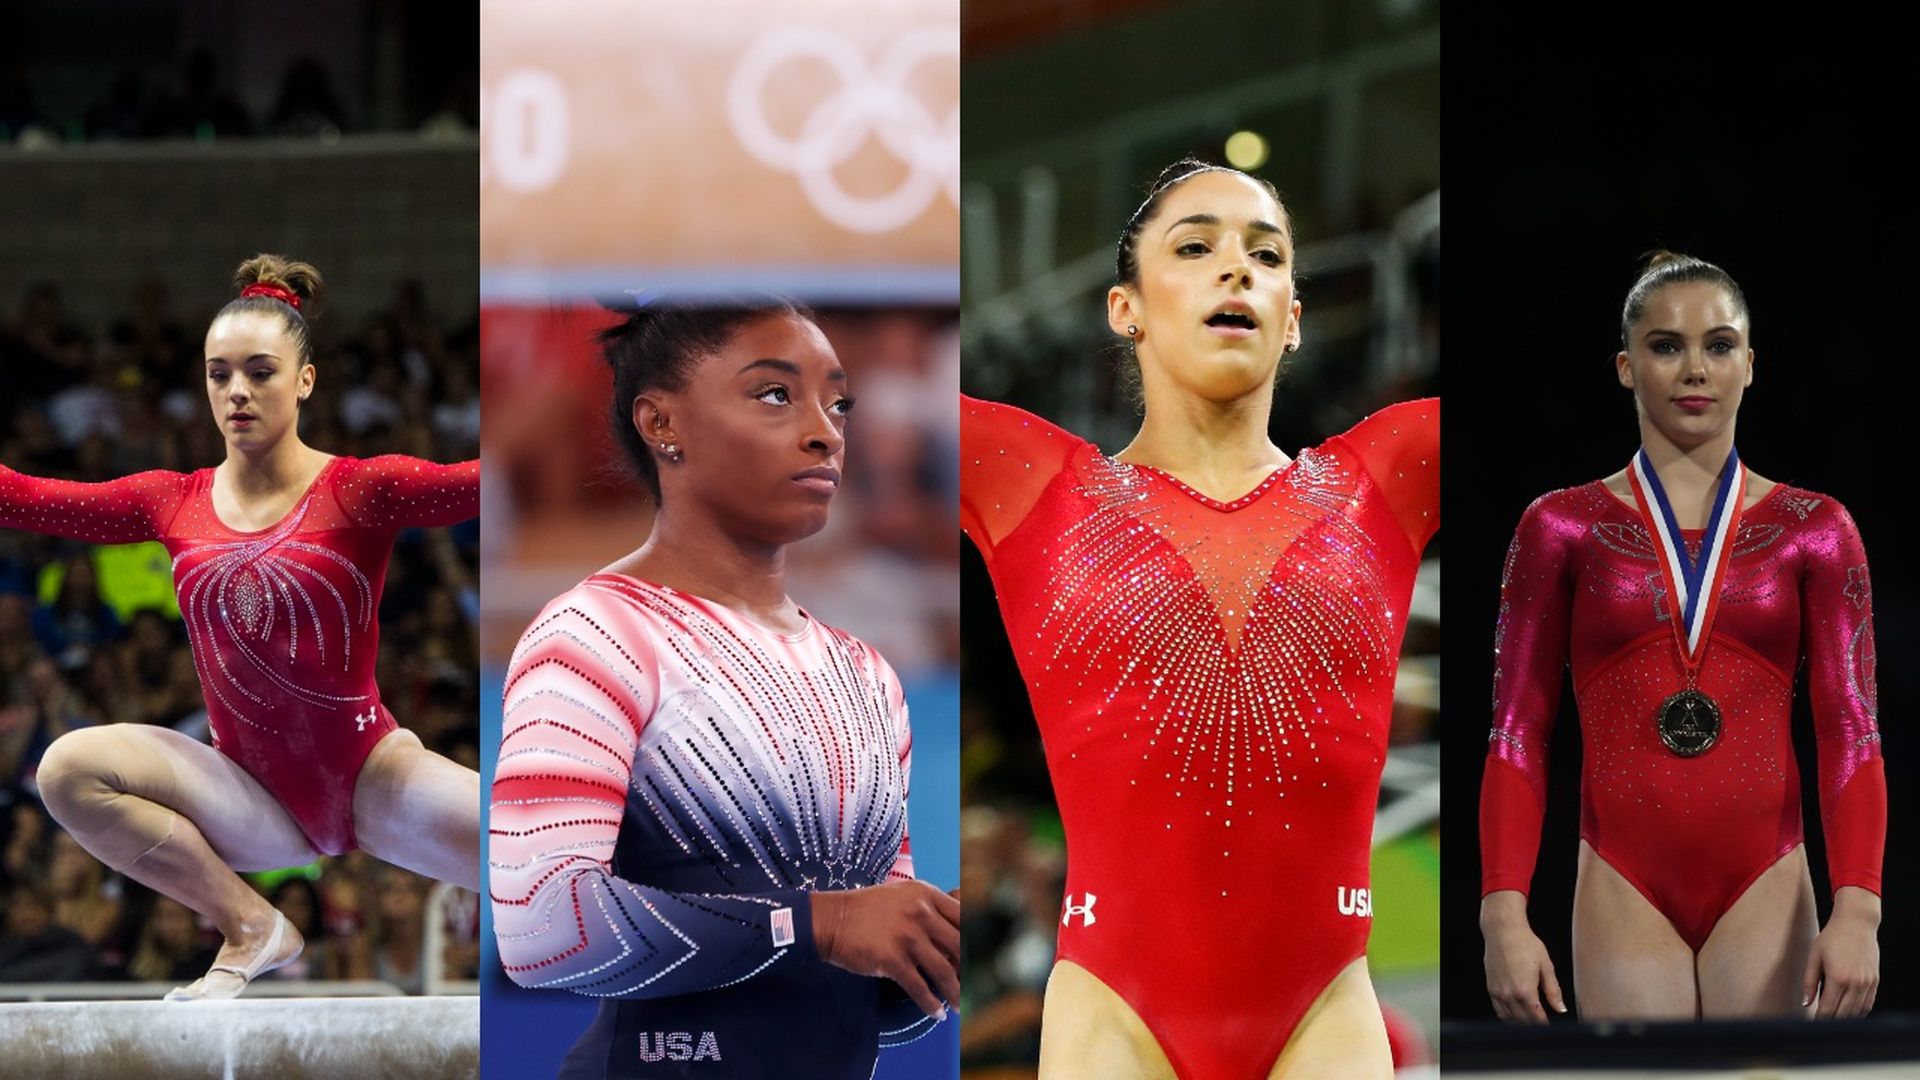 Photo collage of Maggie Nichols, Simone Biles, Aly Raisman and McKayla Maroney in their gymnastics uniforms